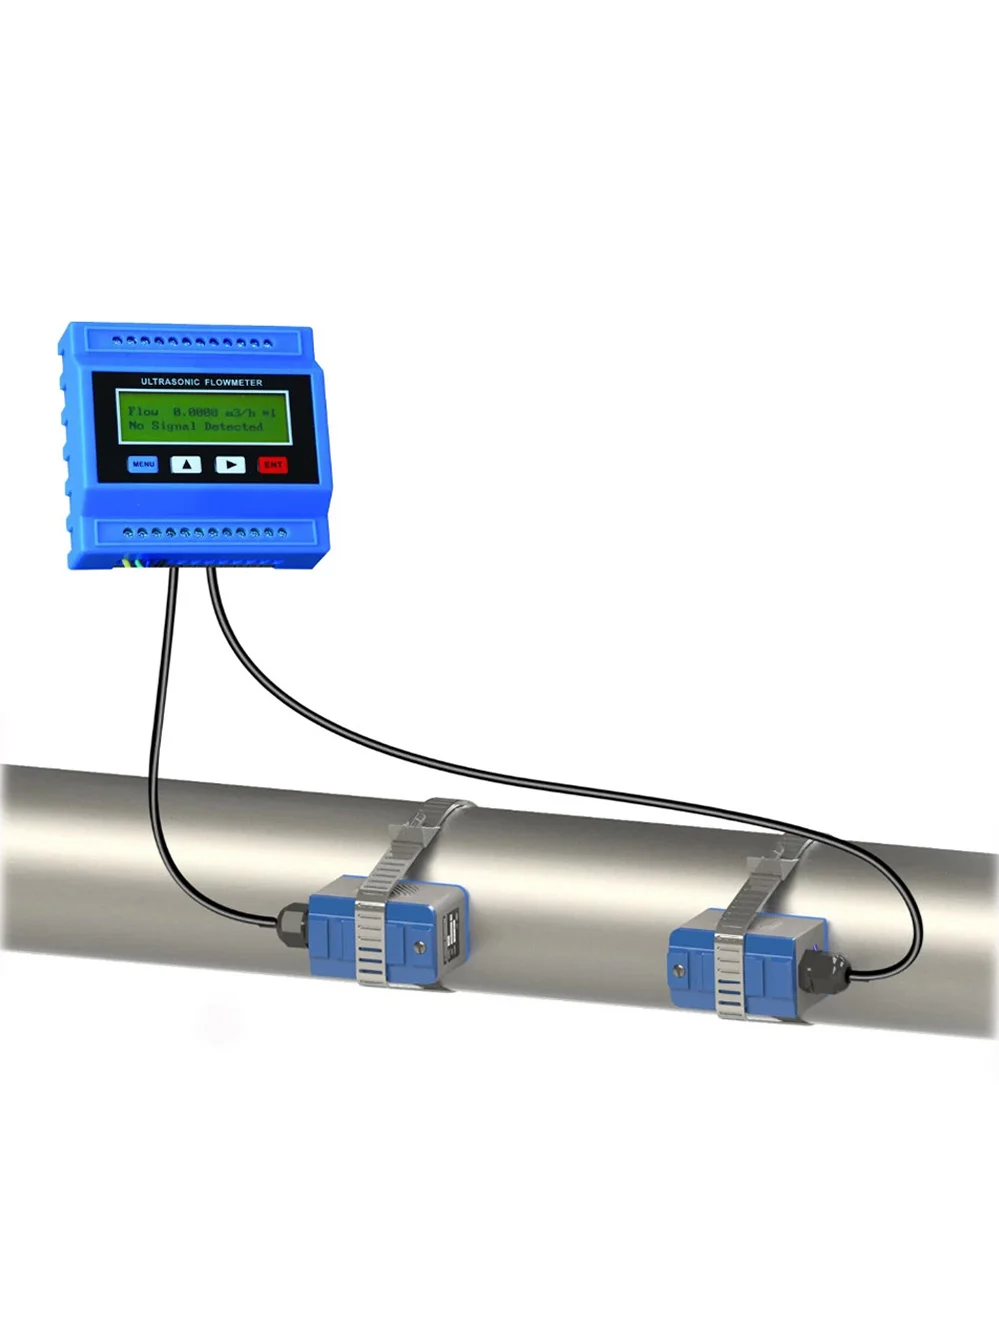 TUF-2000M Ultrasonic Flow Meter Waterproof Flowmeter DN25-100mm TS-2 Transducer 